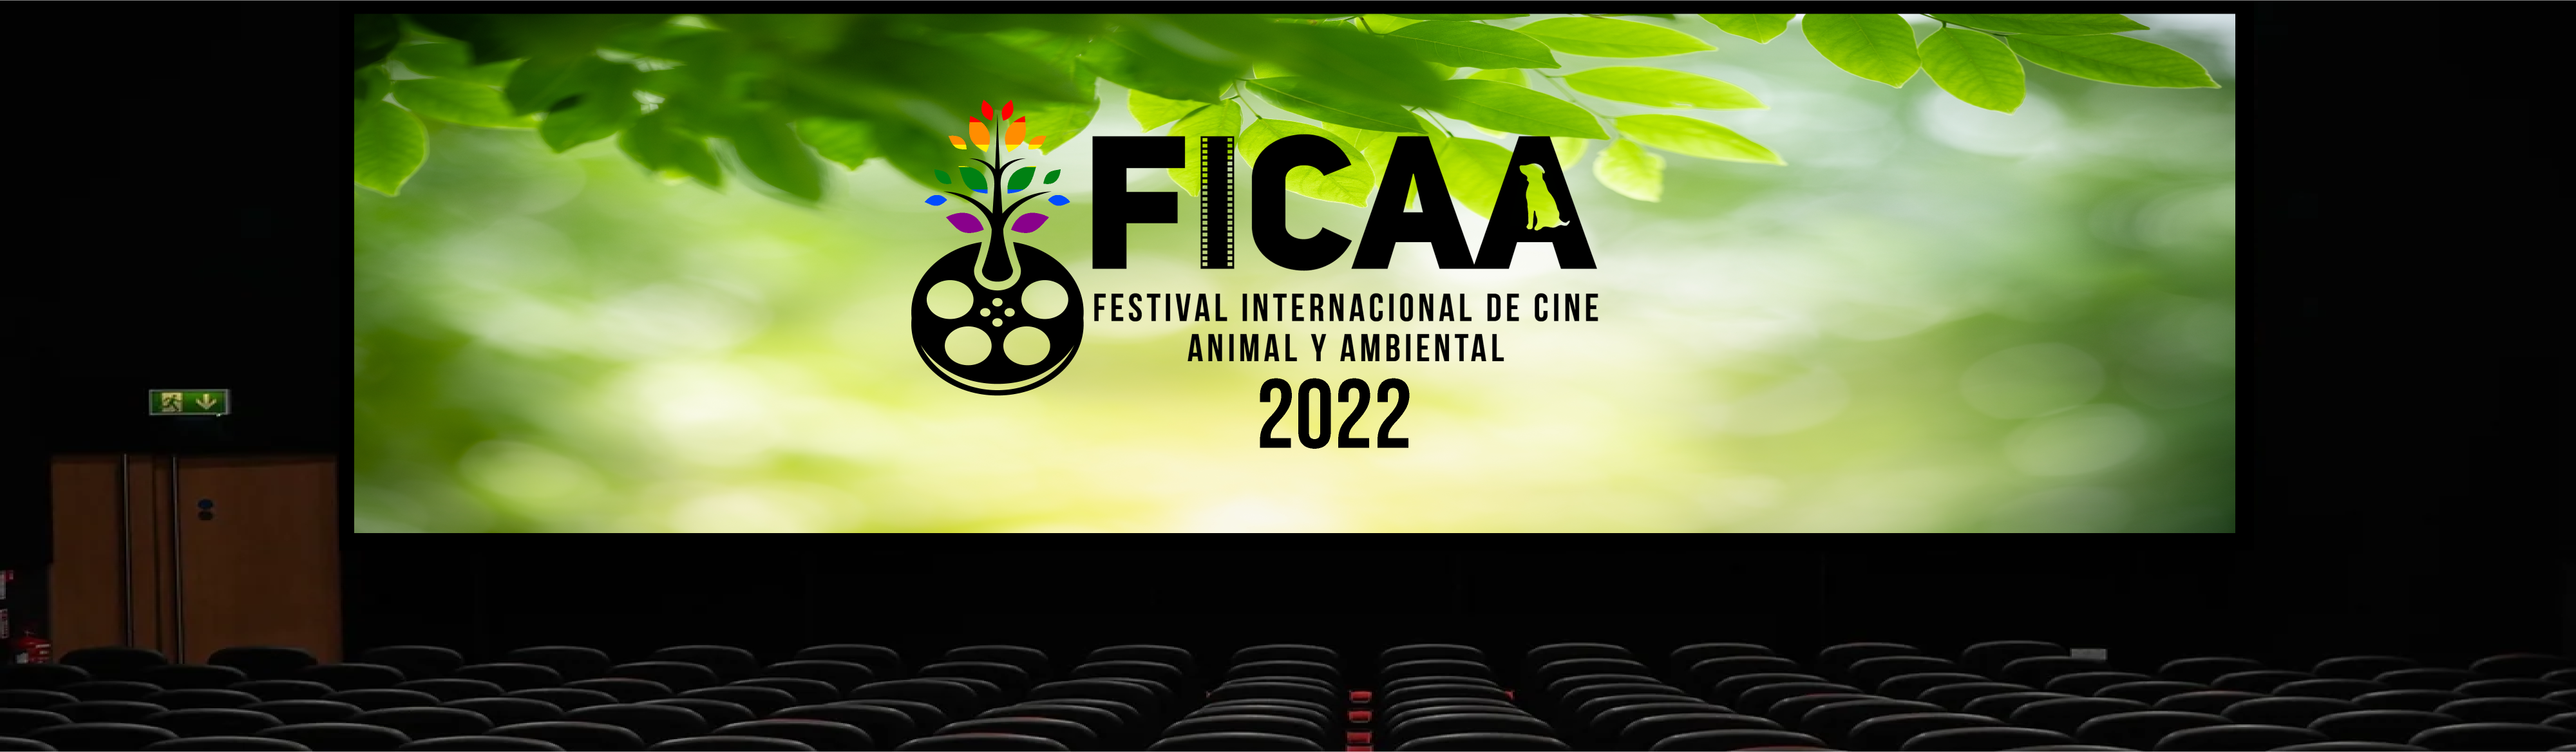 FICAA 2022 Banner